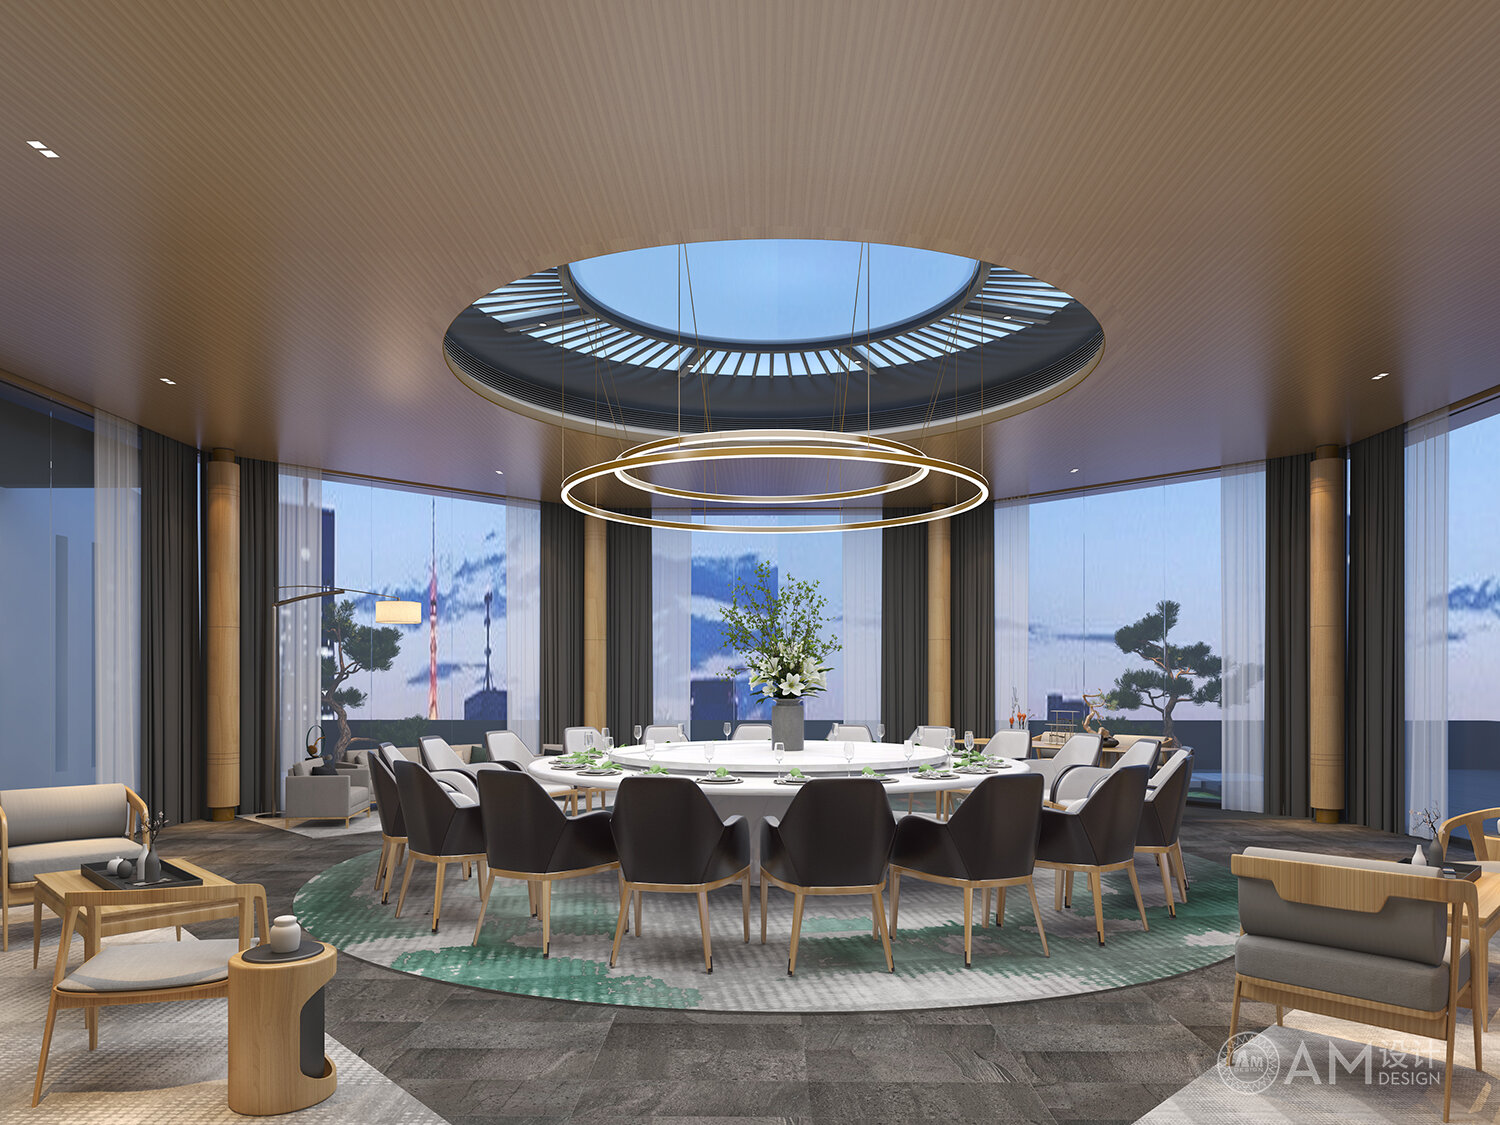 AM DESIGN | Private room design of Beijing Aobei Corporate Club